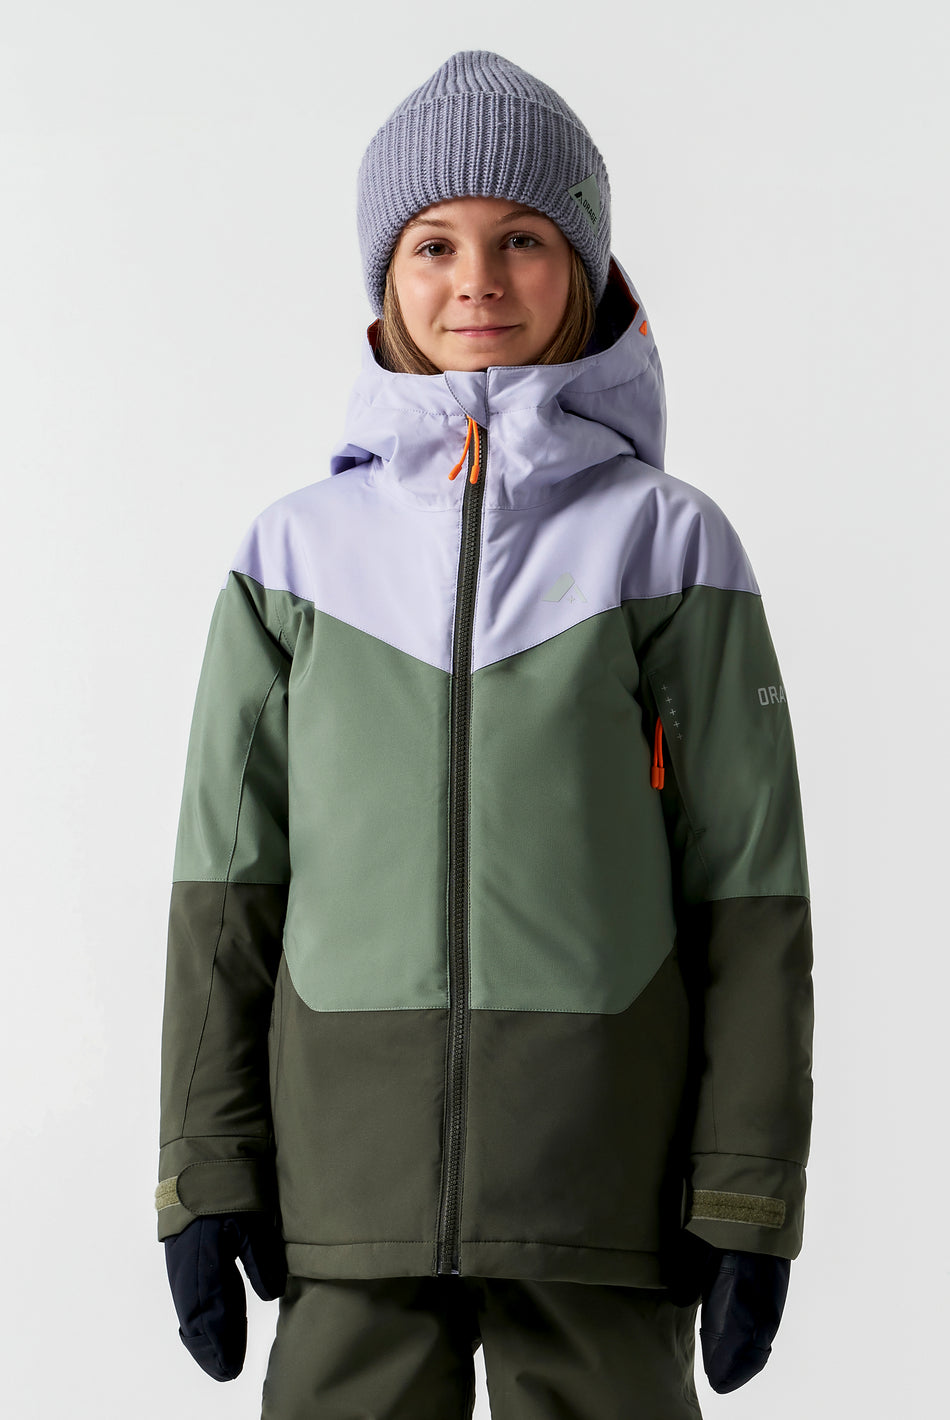 Technical Ski Outerwear: Jackets & Pants | Orage – Orage Outerwear